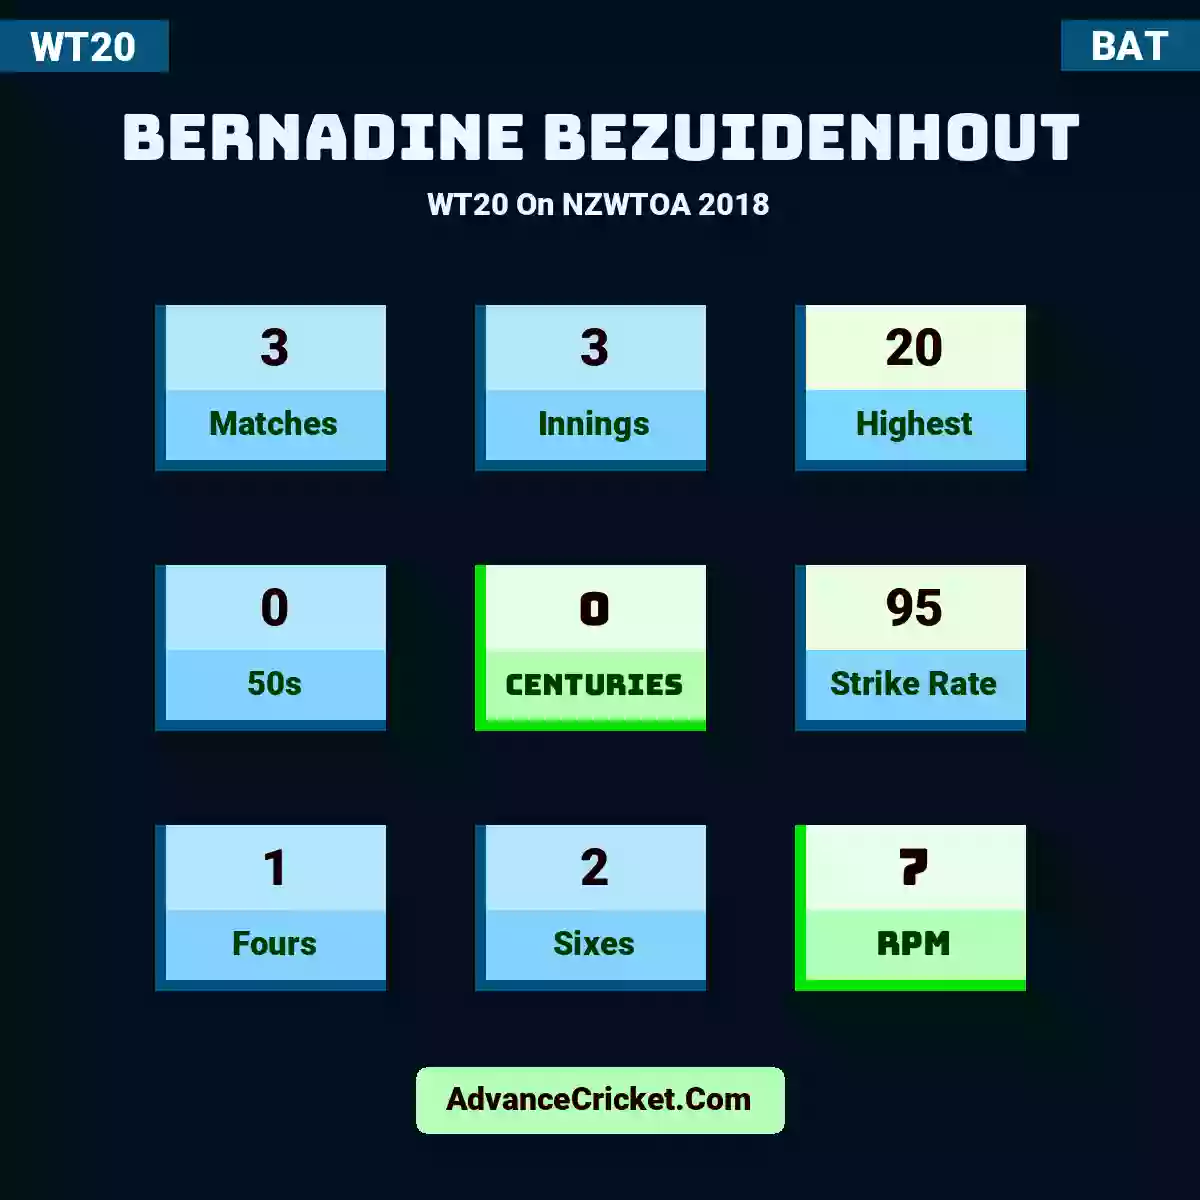 Bernadine Bezuidenhout WT20  On NZWTOA 2018, Bernadine Bezuidenhout played 3 matches, scored 20 runs as highest, 0 half-centuries, and 0 centuries, with a strike rate of 95. B.Bezuidenhout hit 1 fours and 2 sixes, with an RPM of 7.